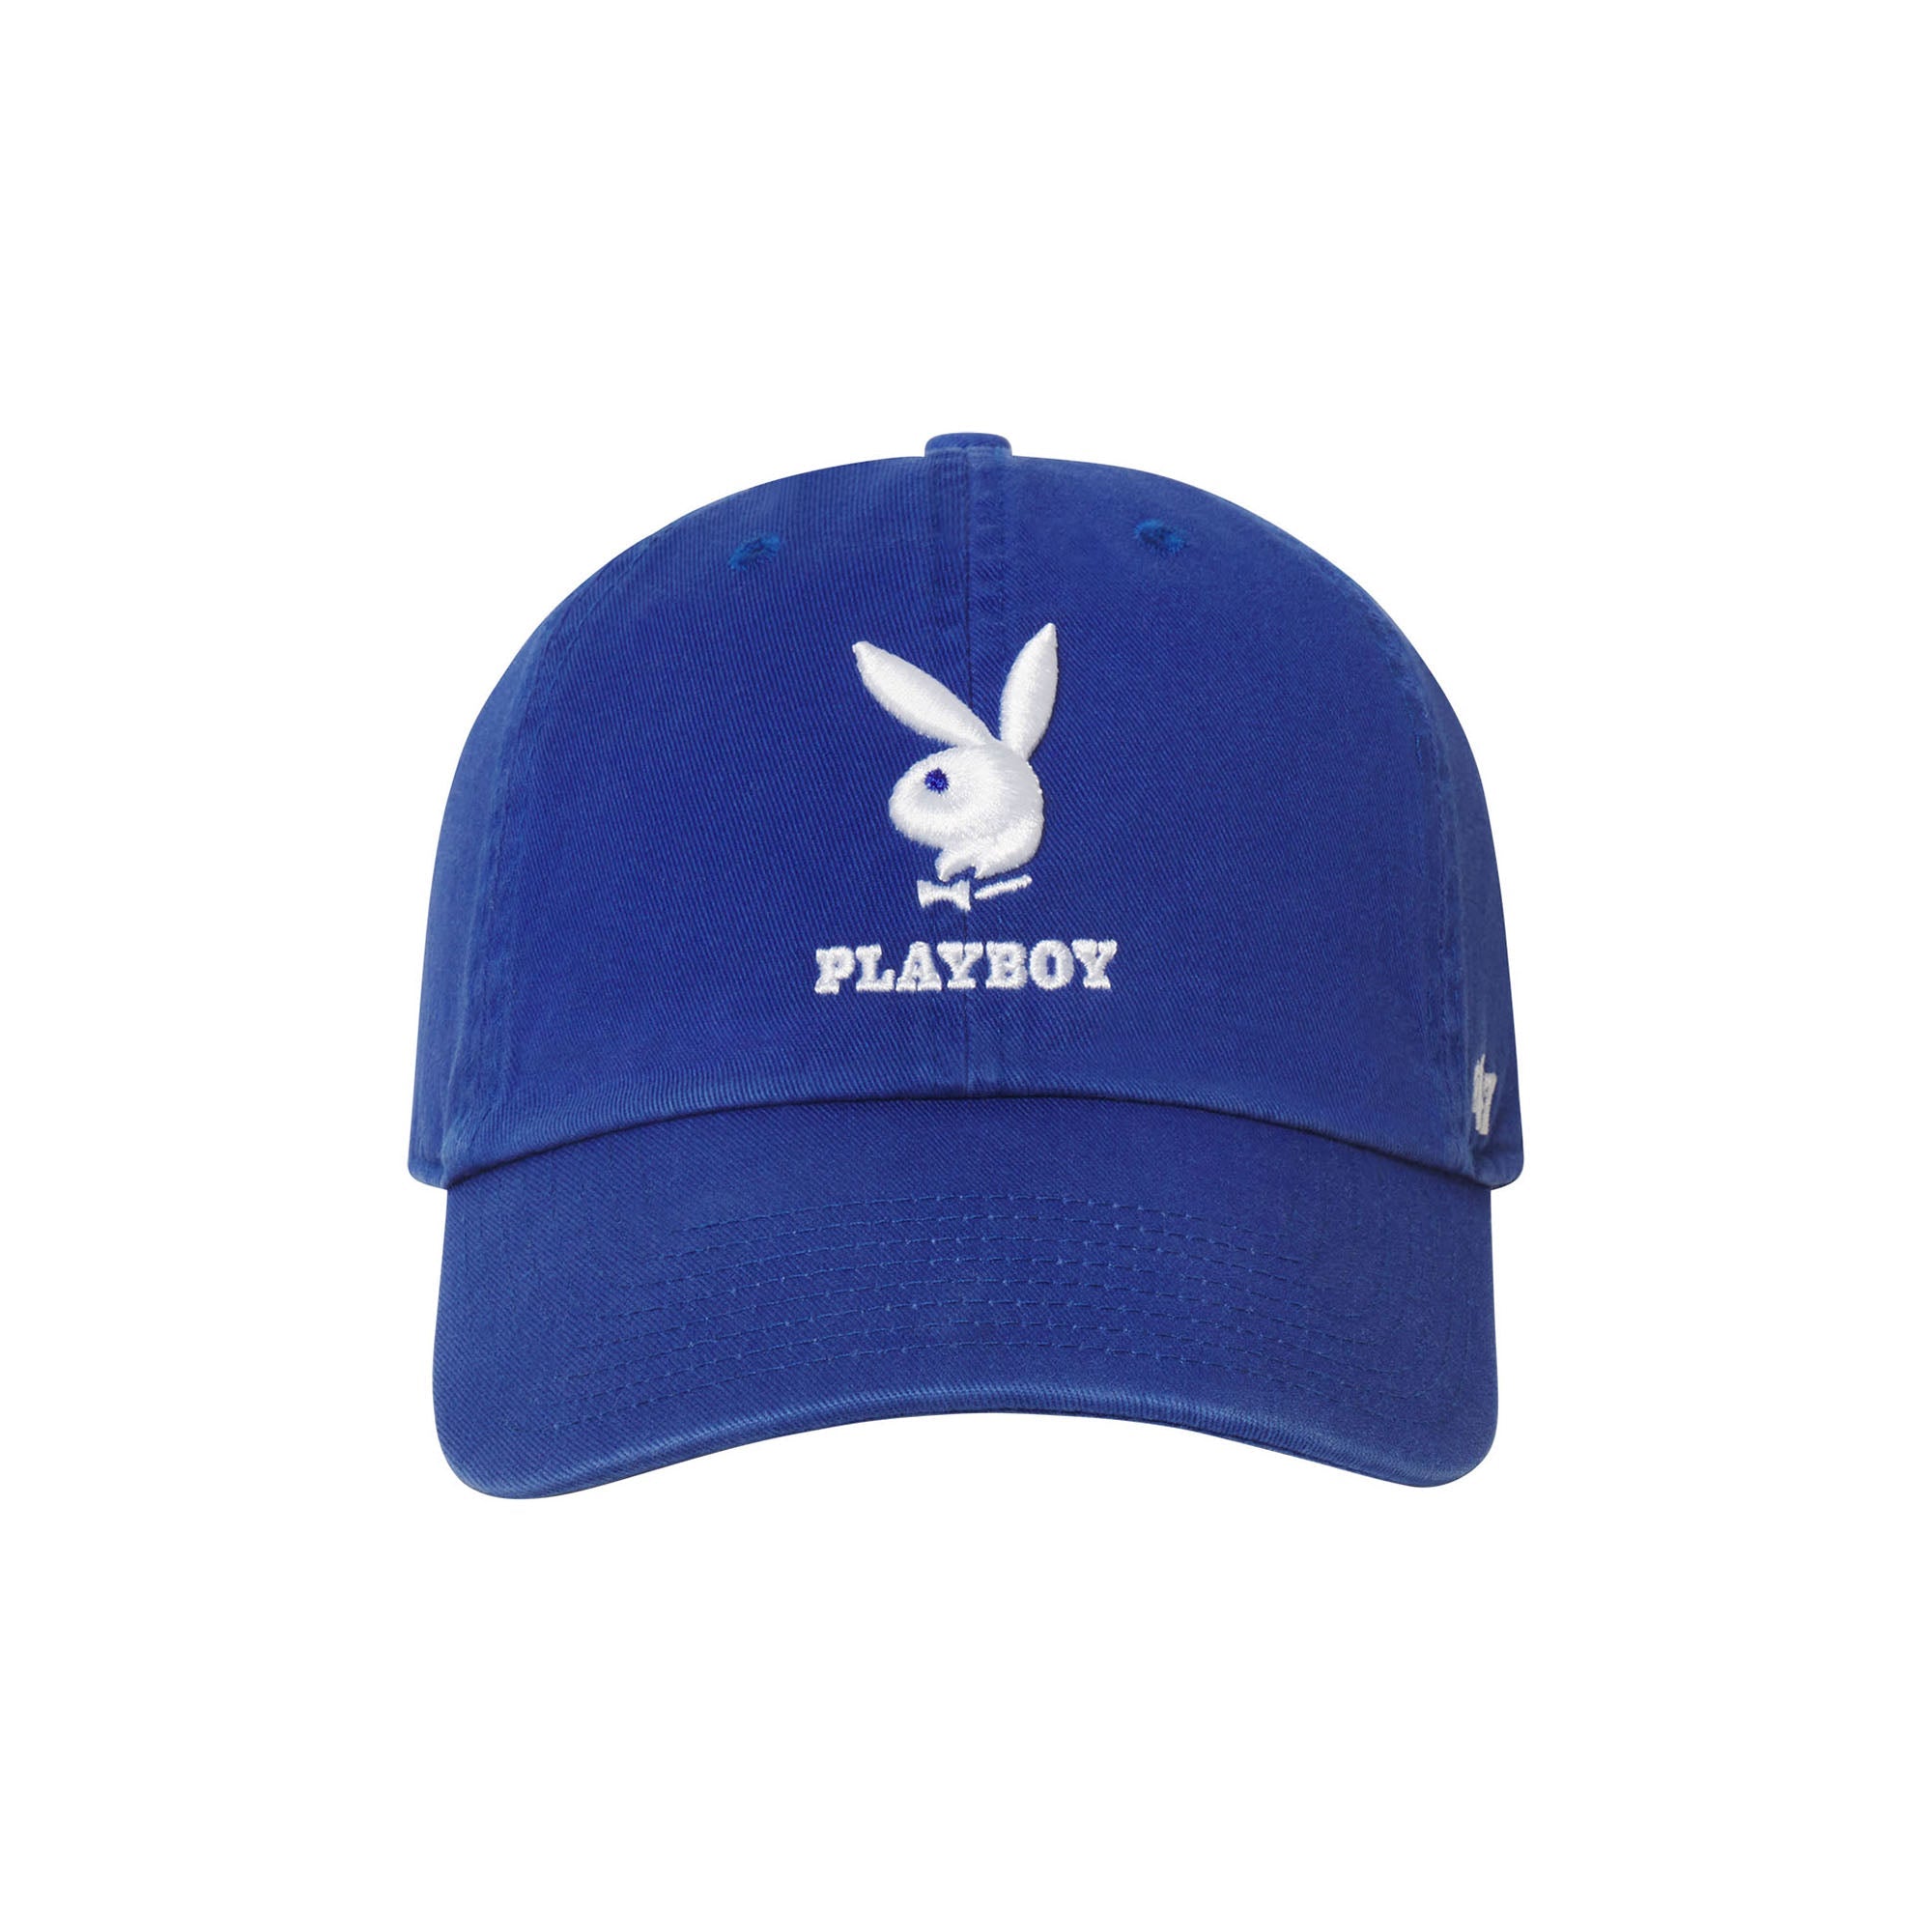 Blue and White Playboy Baseball Costume